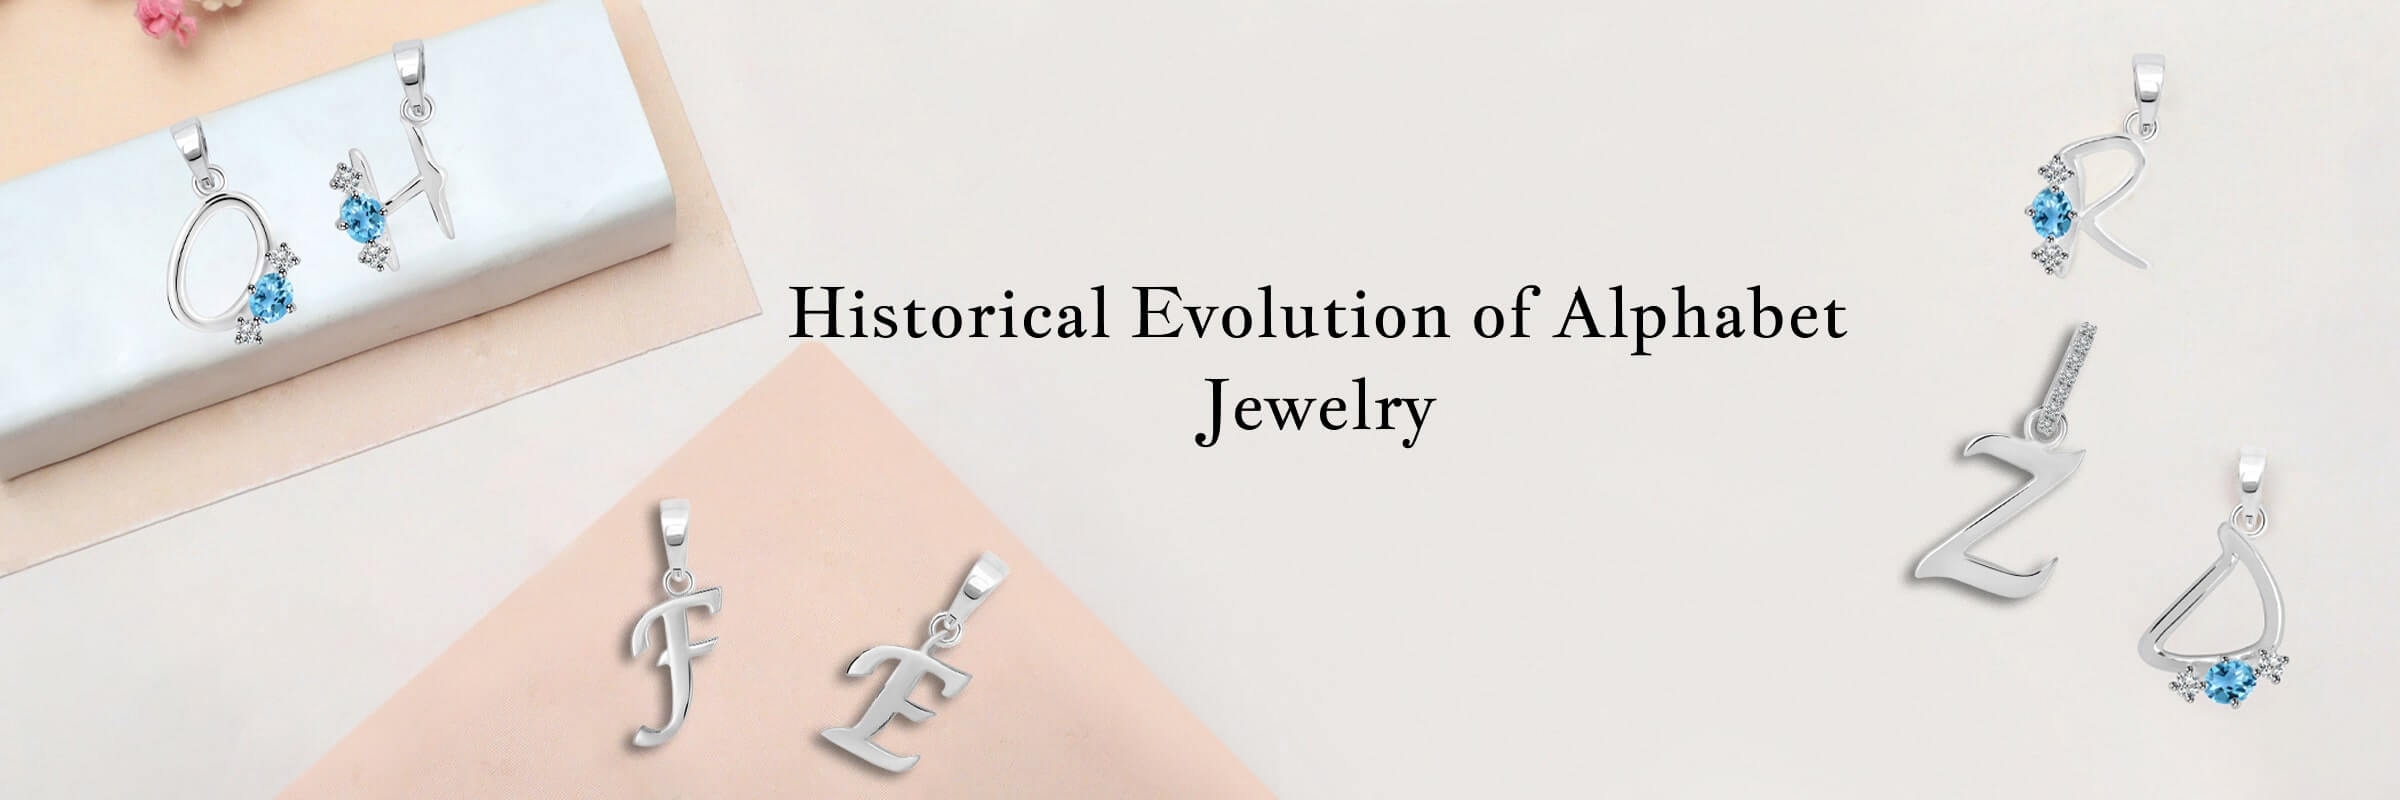 Origins of Alphabet Jewelry